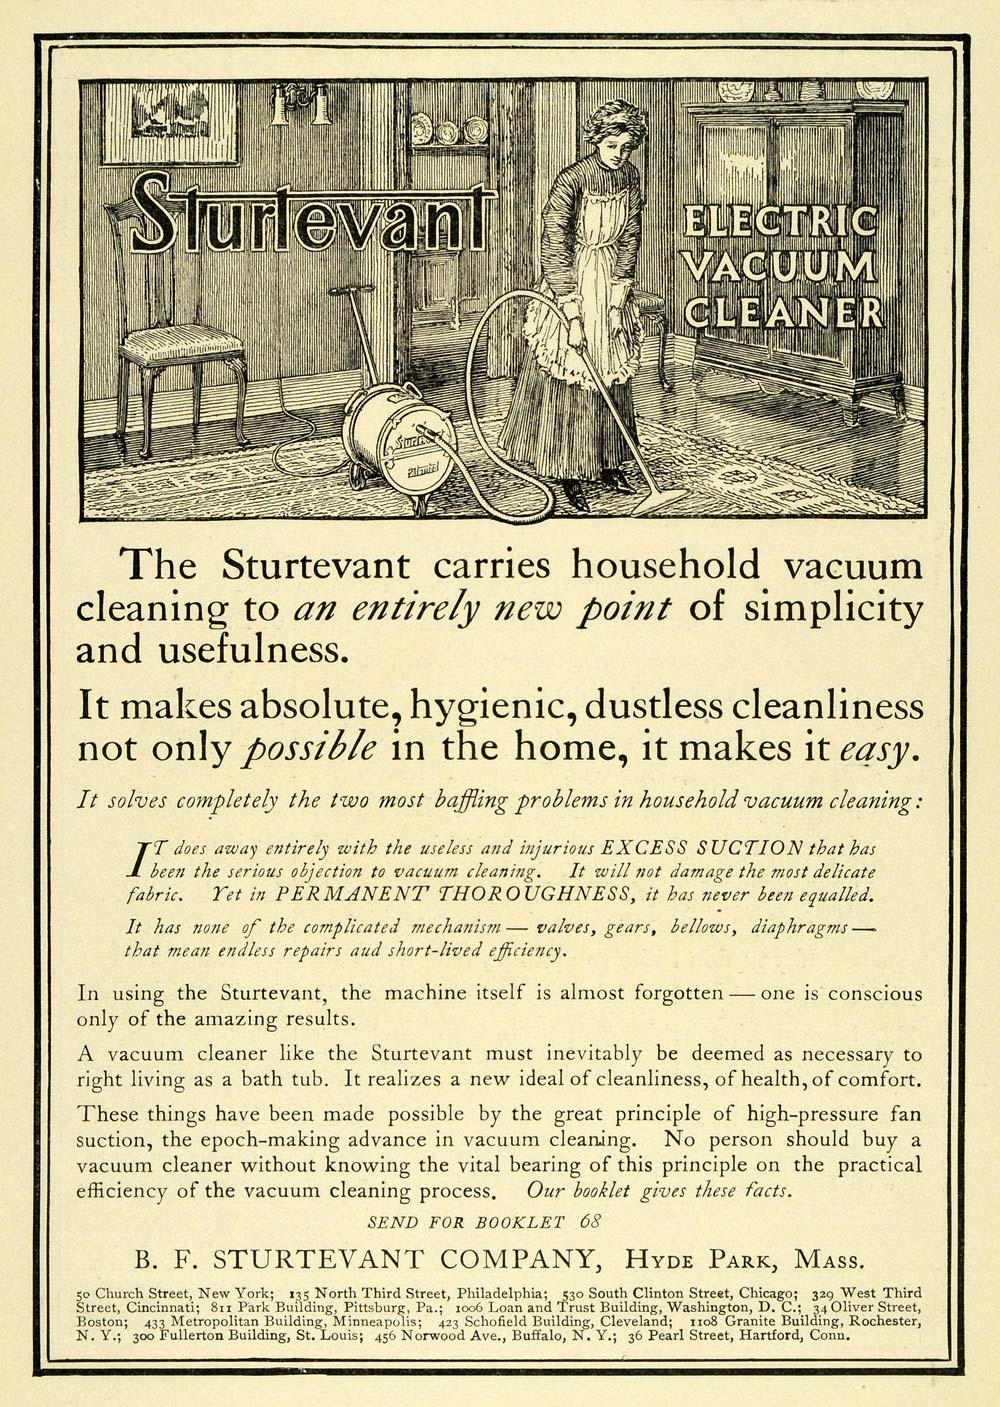 1911 Ad Sturtevant Company Electric Vacuum Cleaner Hyde Park Massachusetts EM2